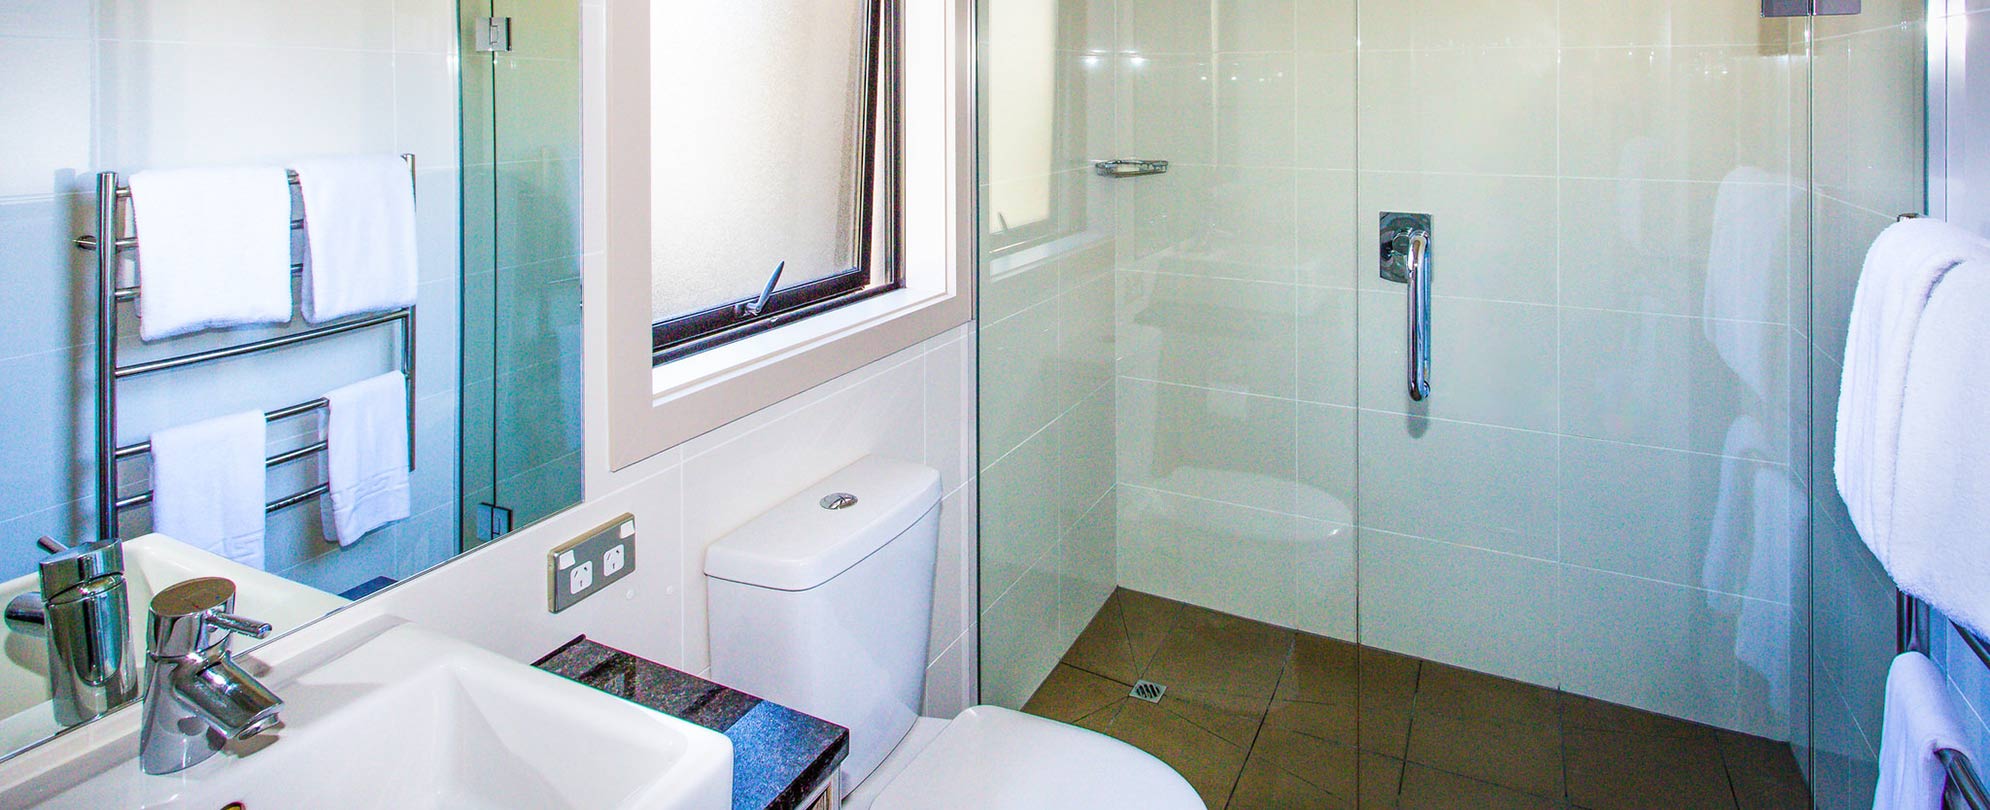 The bathroom of a standard suite at Club Wyndham Wanaka.